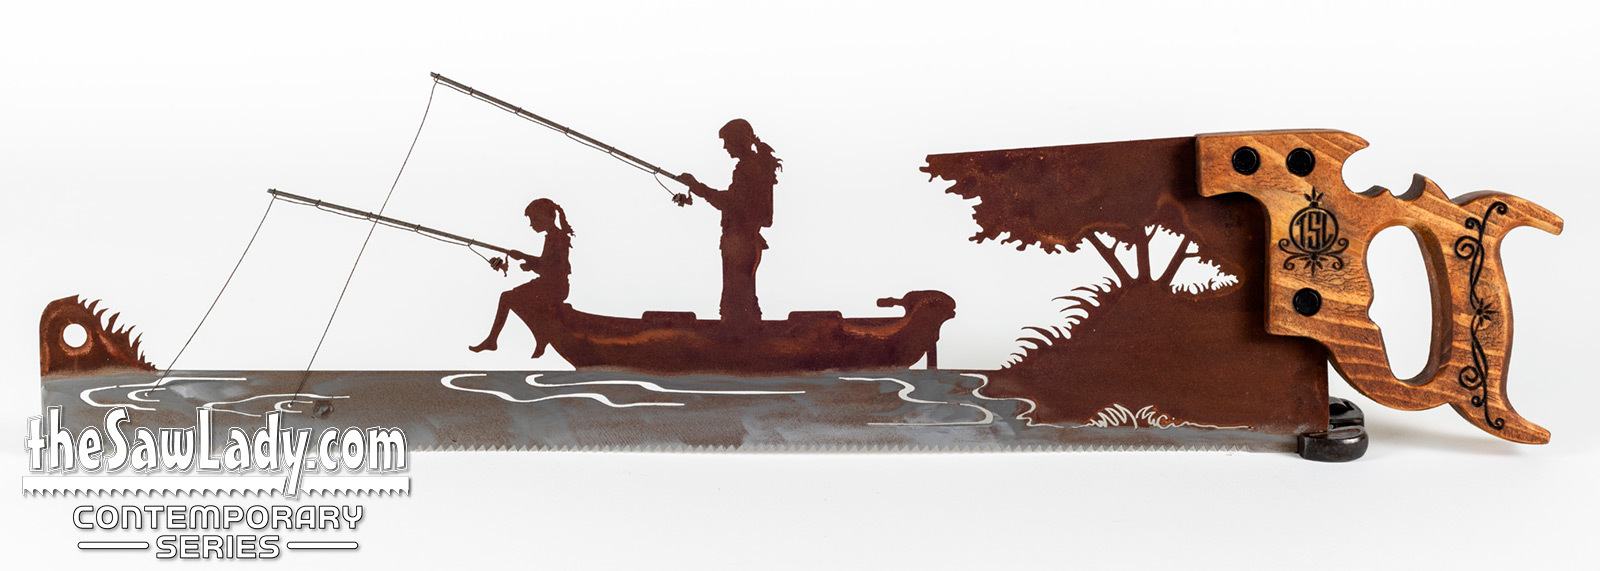 Fishing-Boat-Woman-Girl-Metal-wall-art-saw